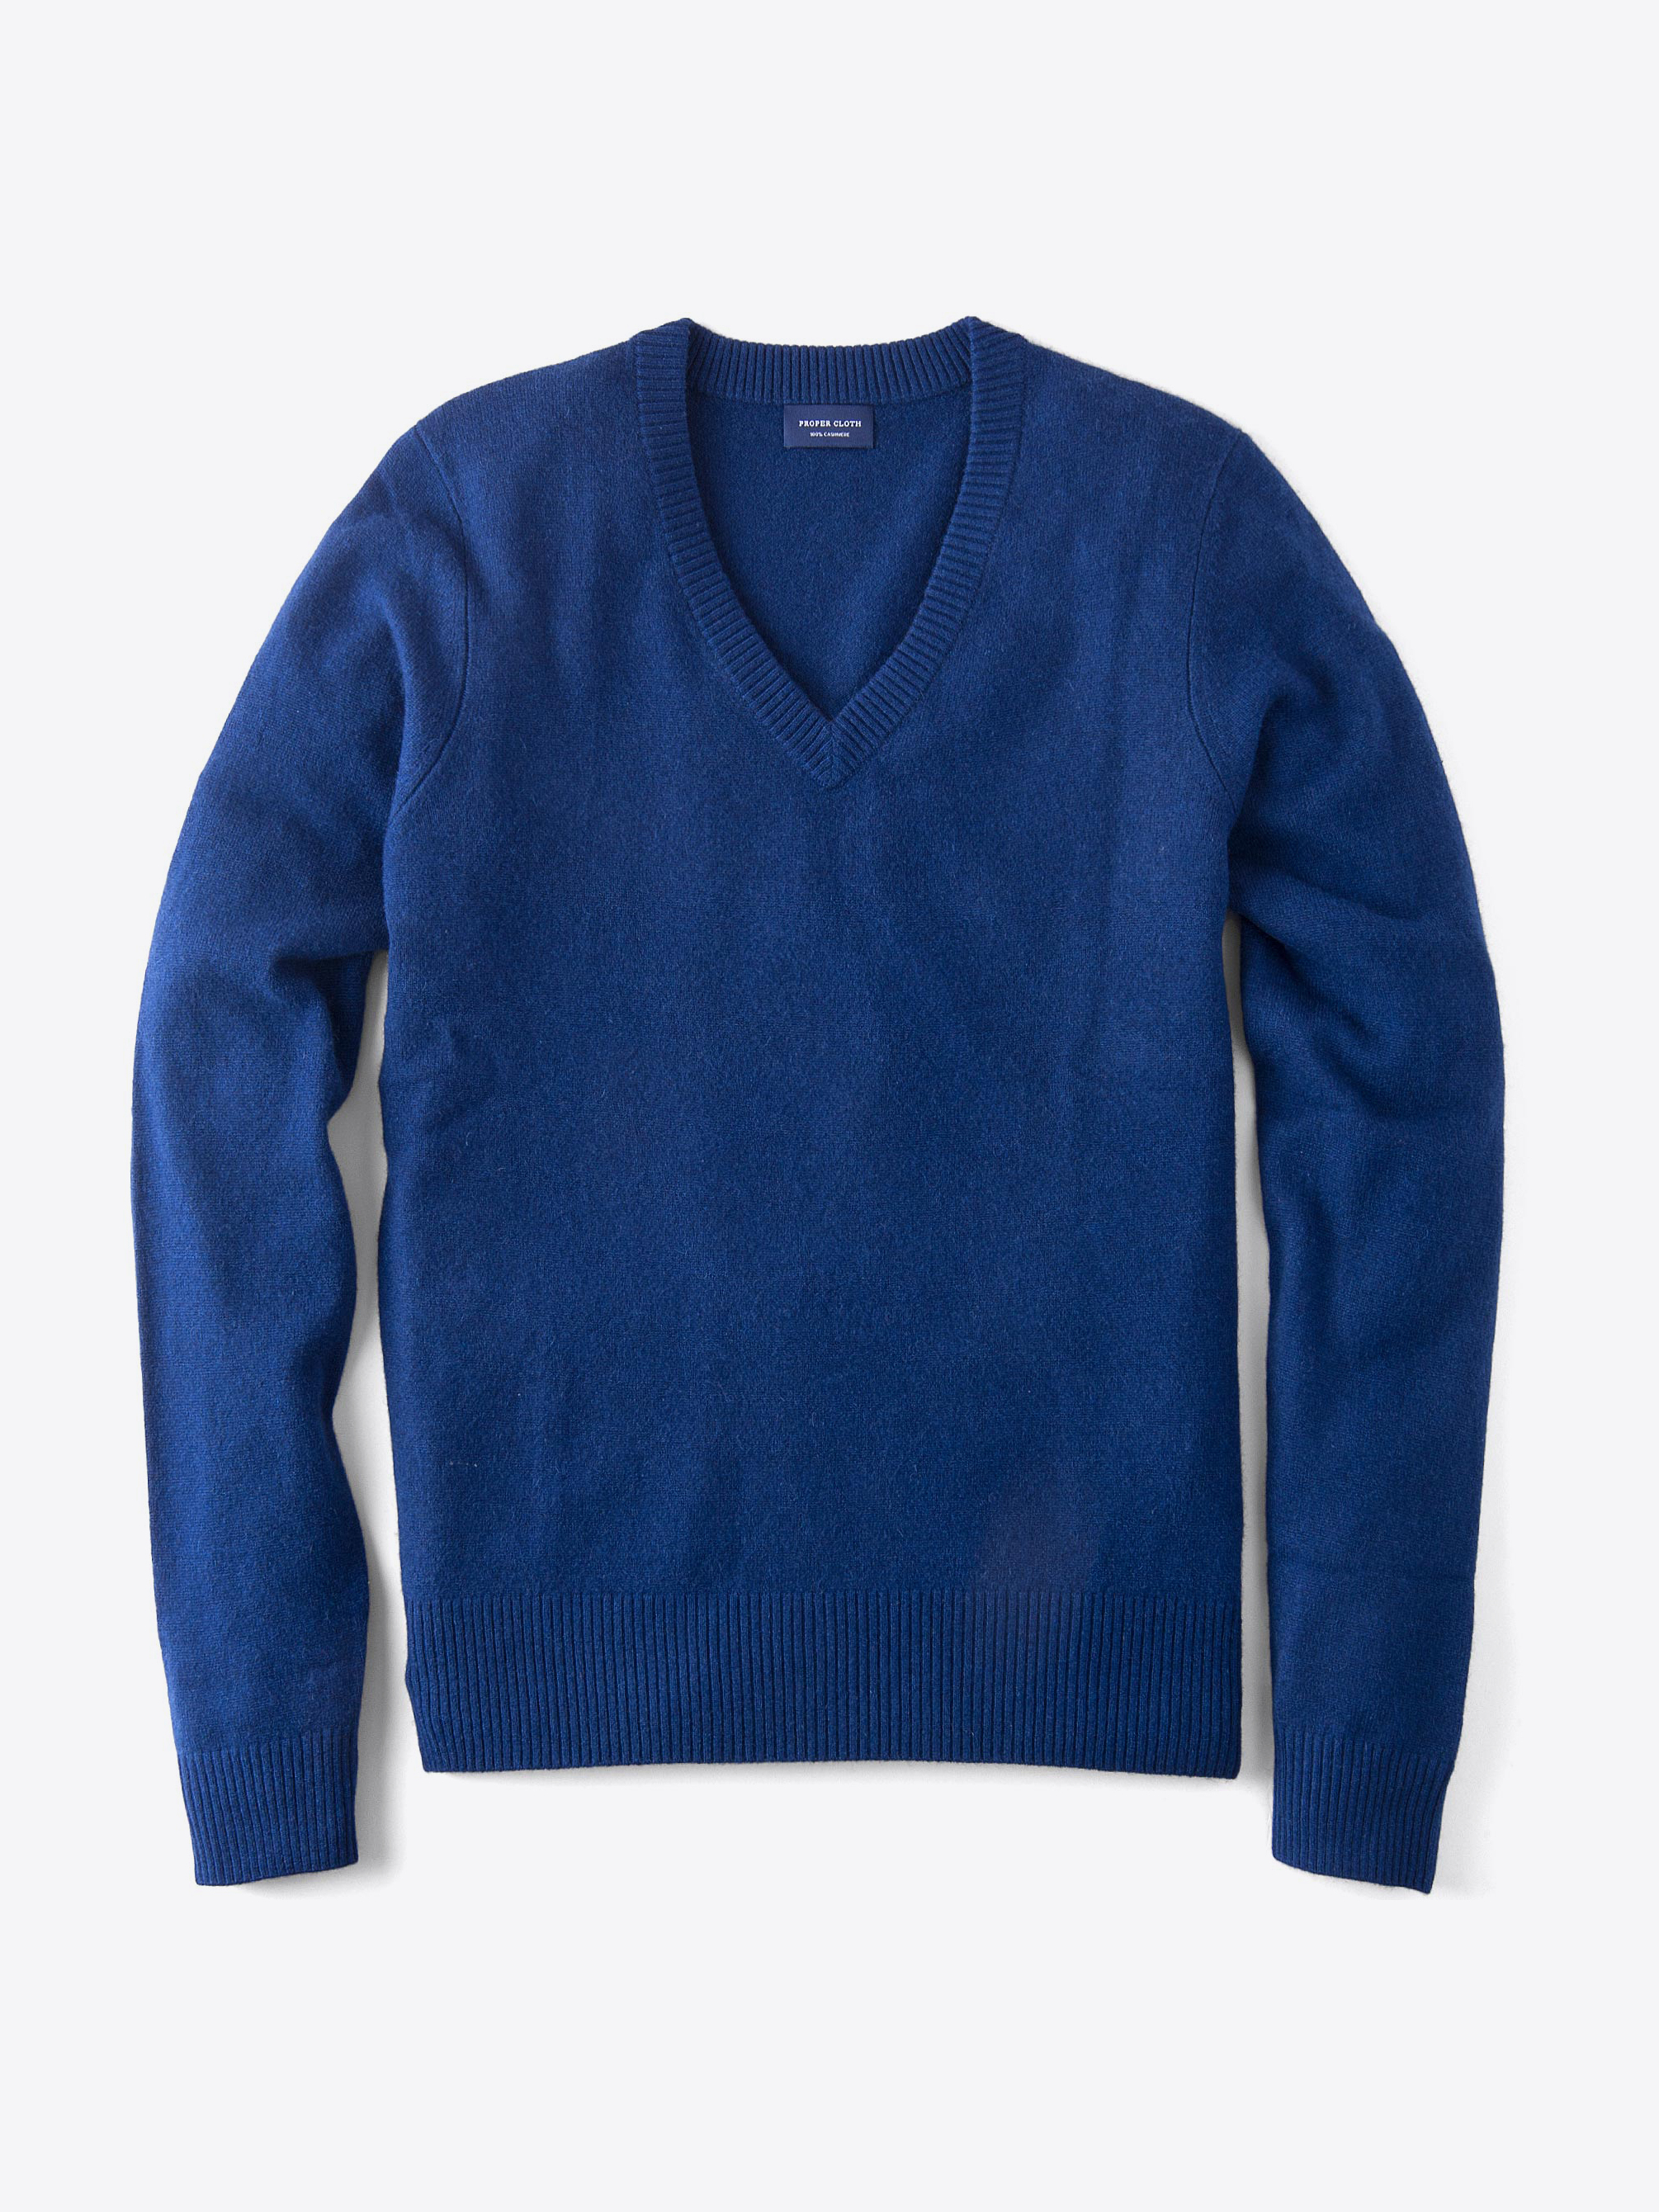 Zoom Image of Royal Blue Cashmere V-Neck Sweater